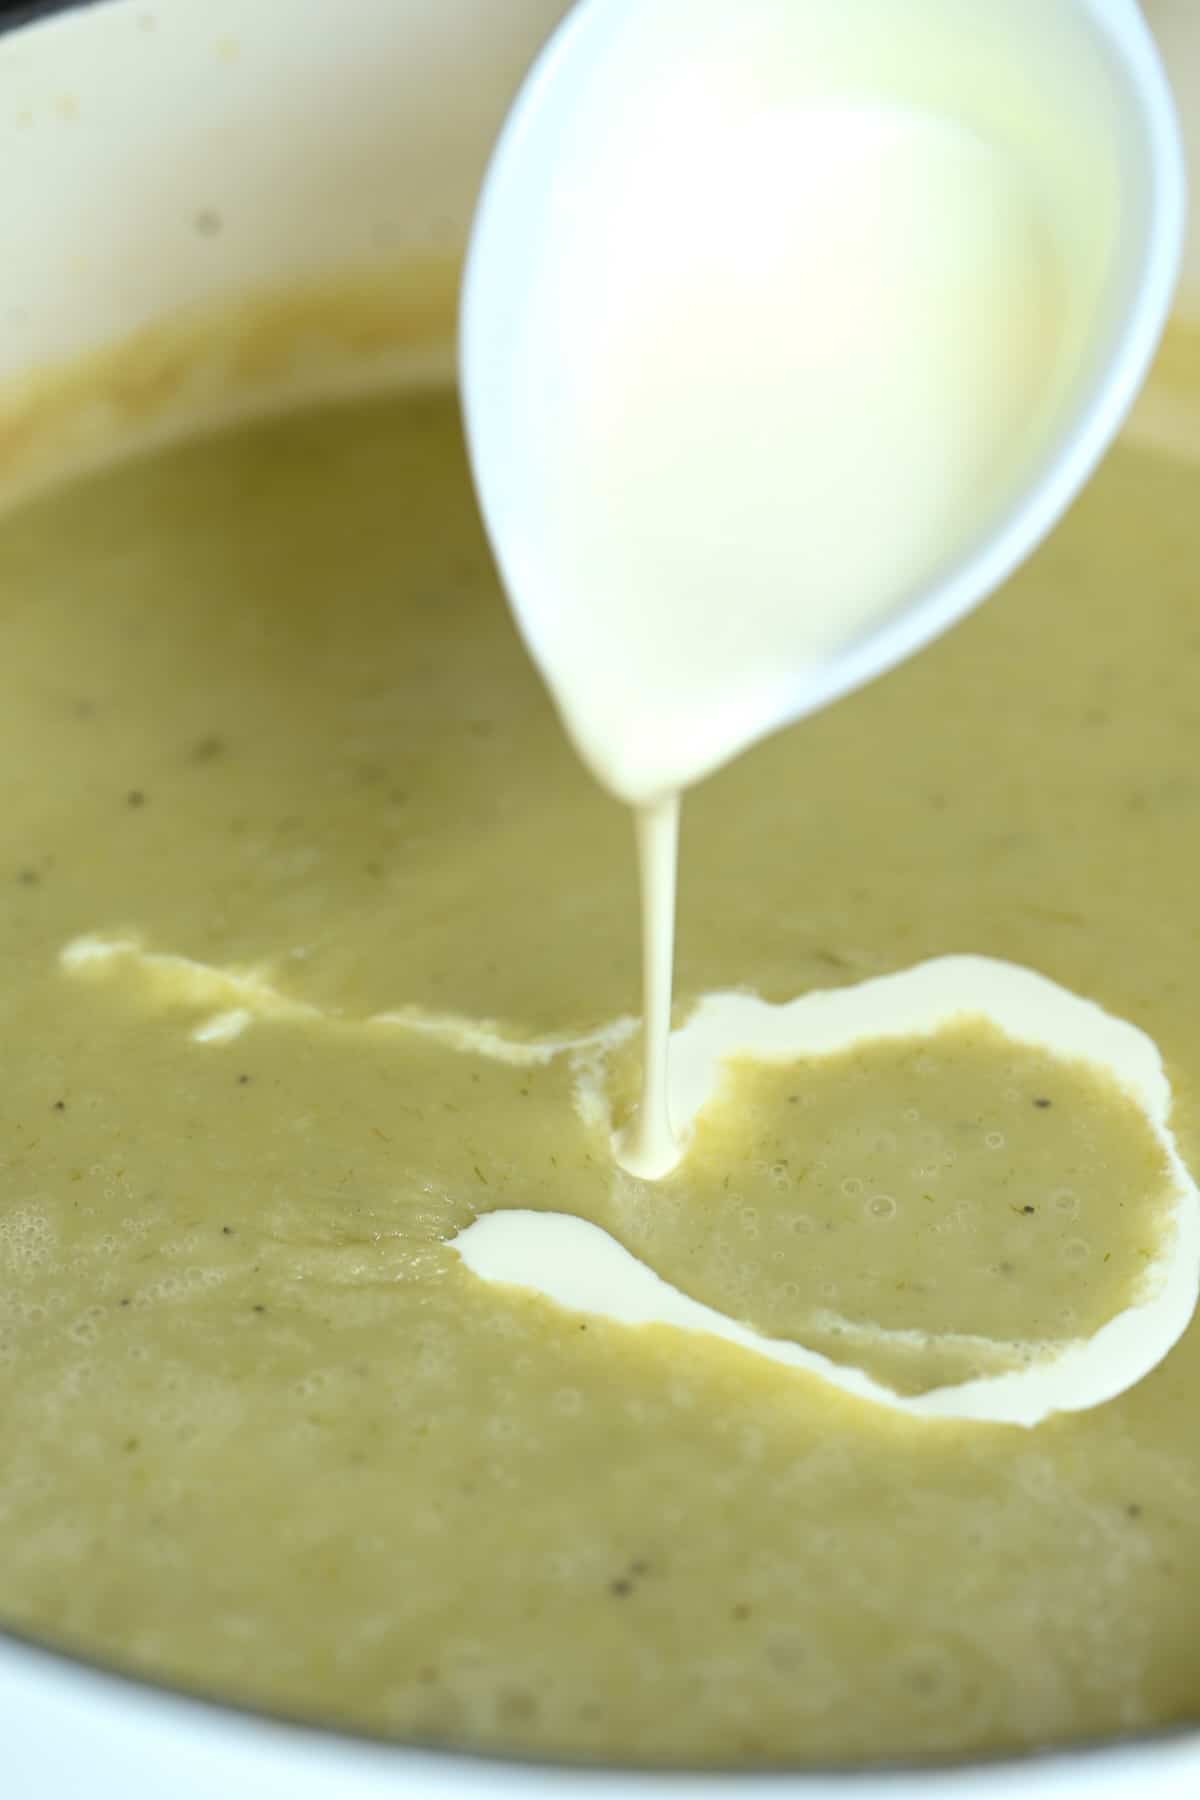 Adding cream to a potato leek soup